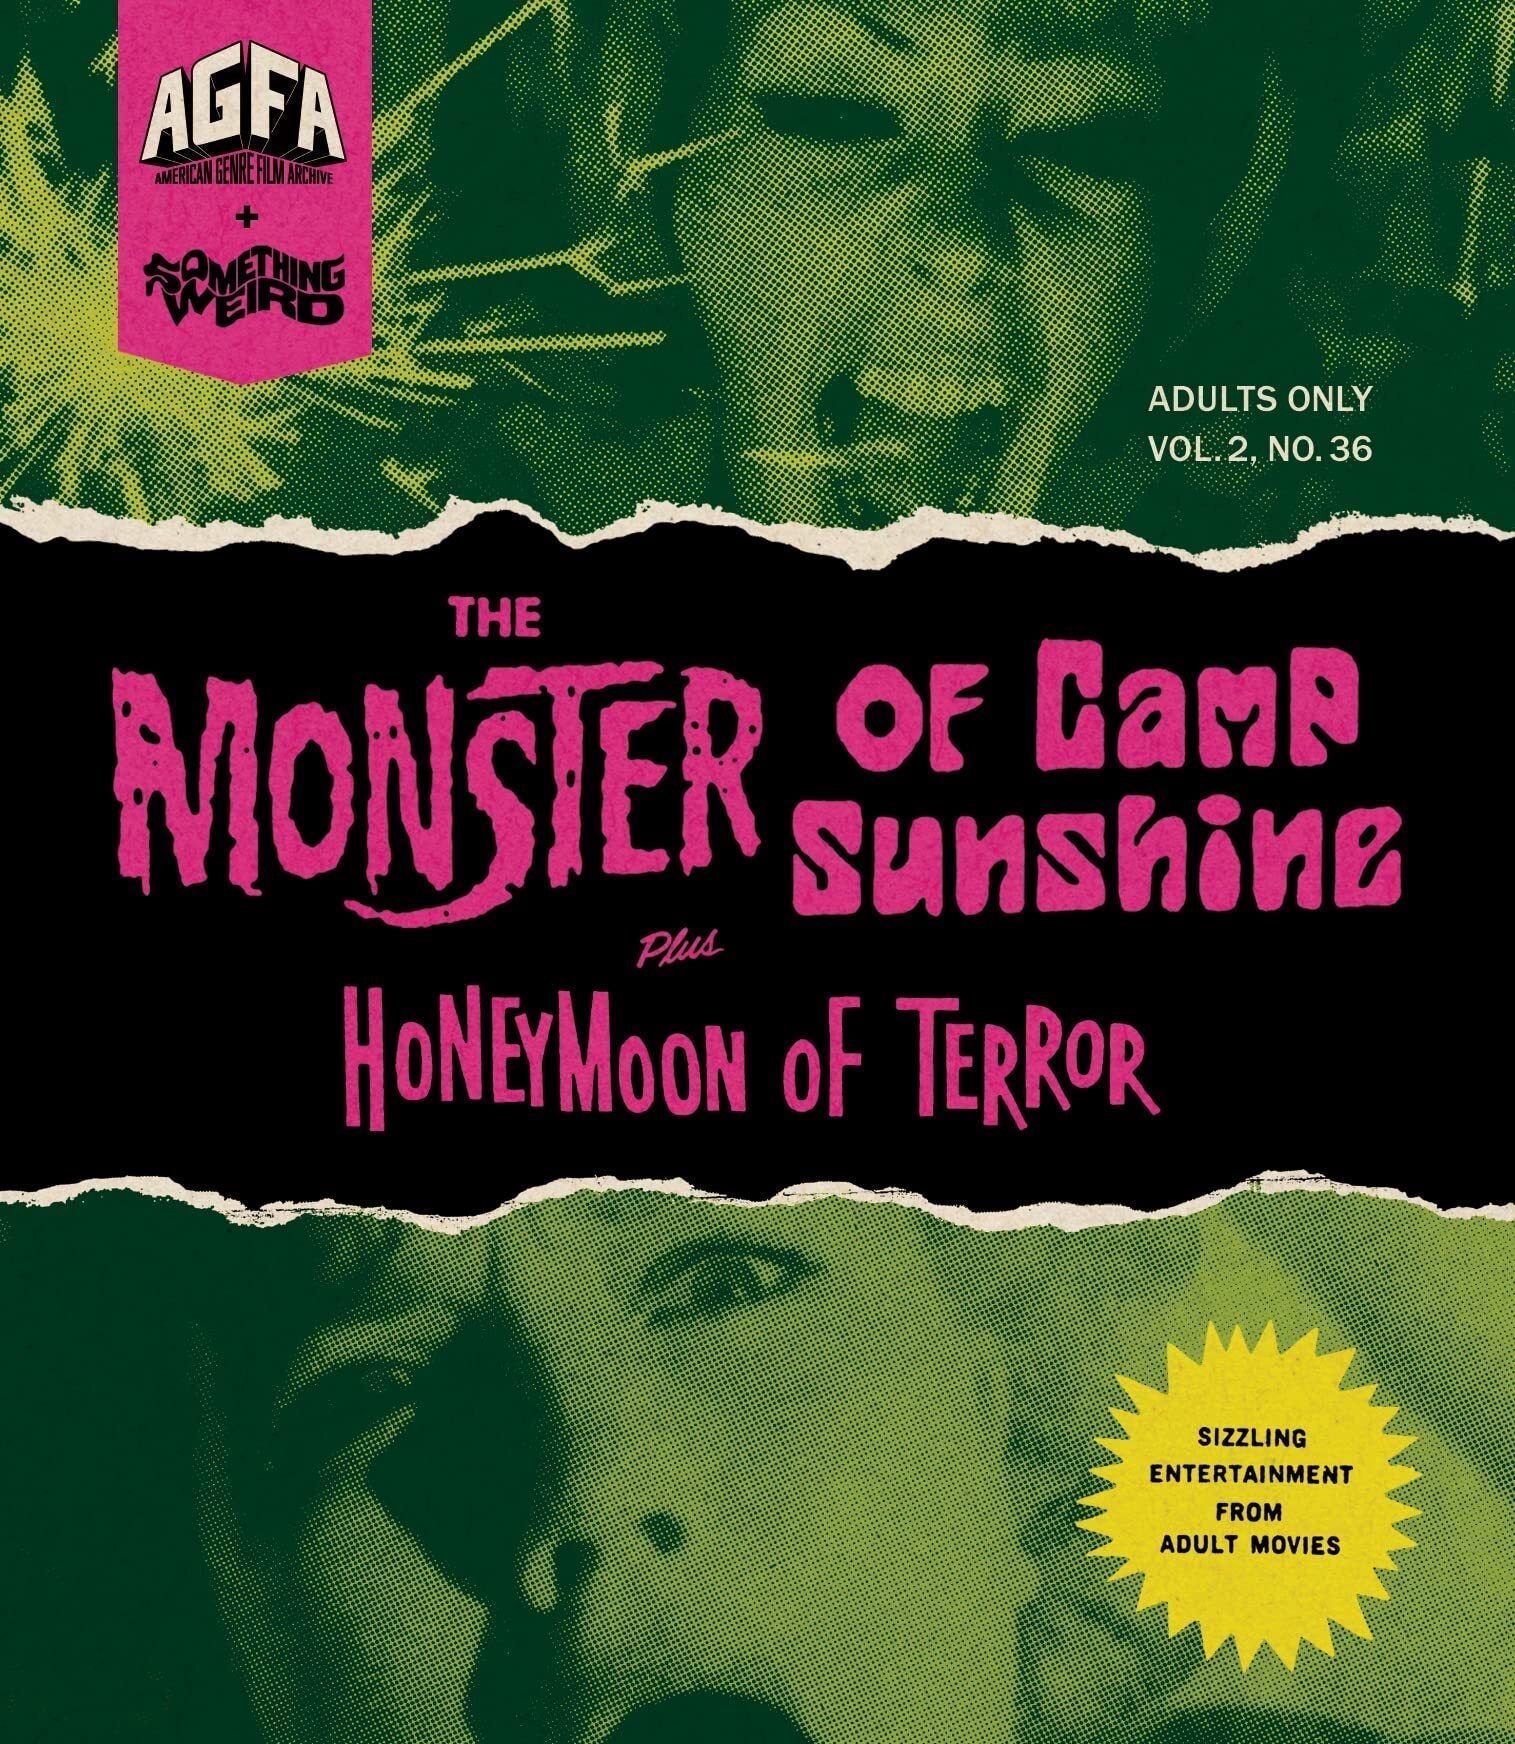 The Monster Of Camp Sunshine / Honeymoon Terror (Limited Edition) Blu-Ray Blu-Ray